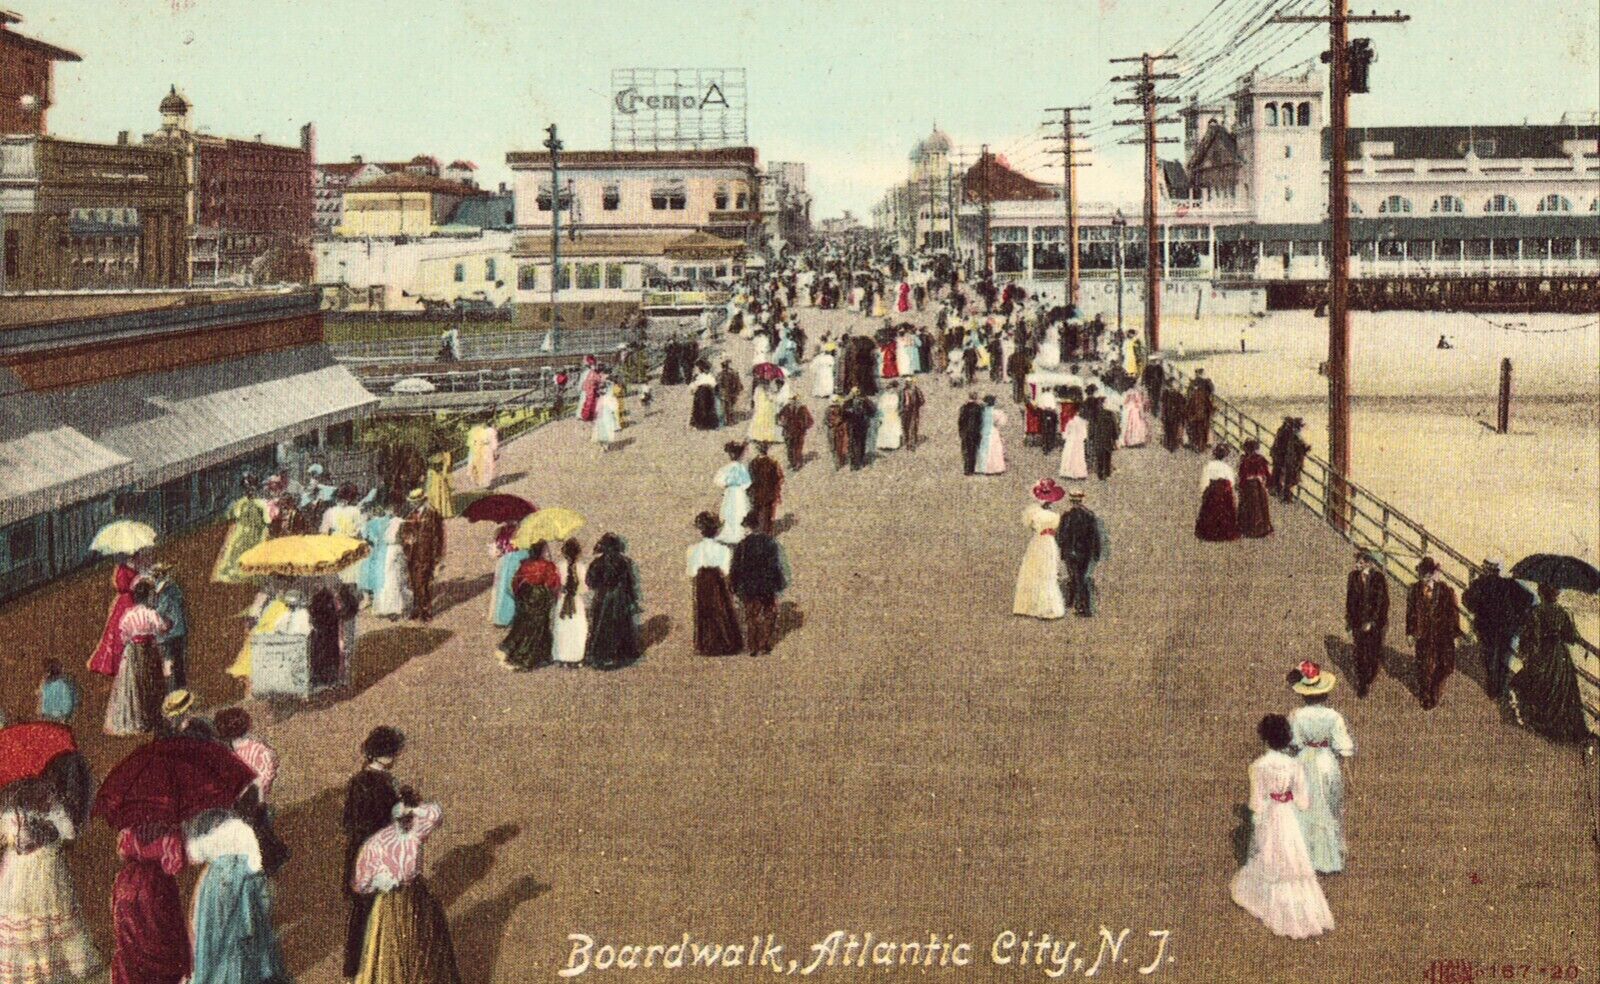 On The Boardwalk - Crowd of People - Atlantic City, Jersey 1907 Postcard